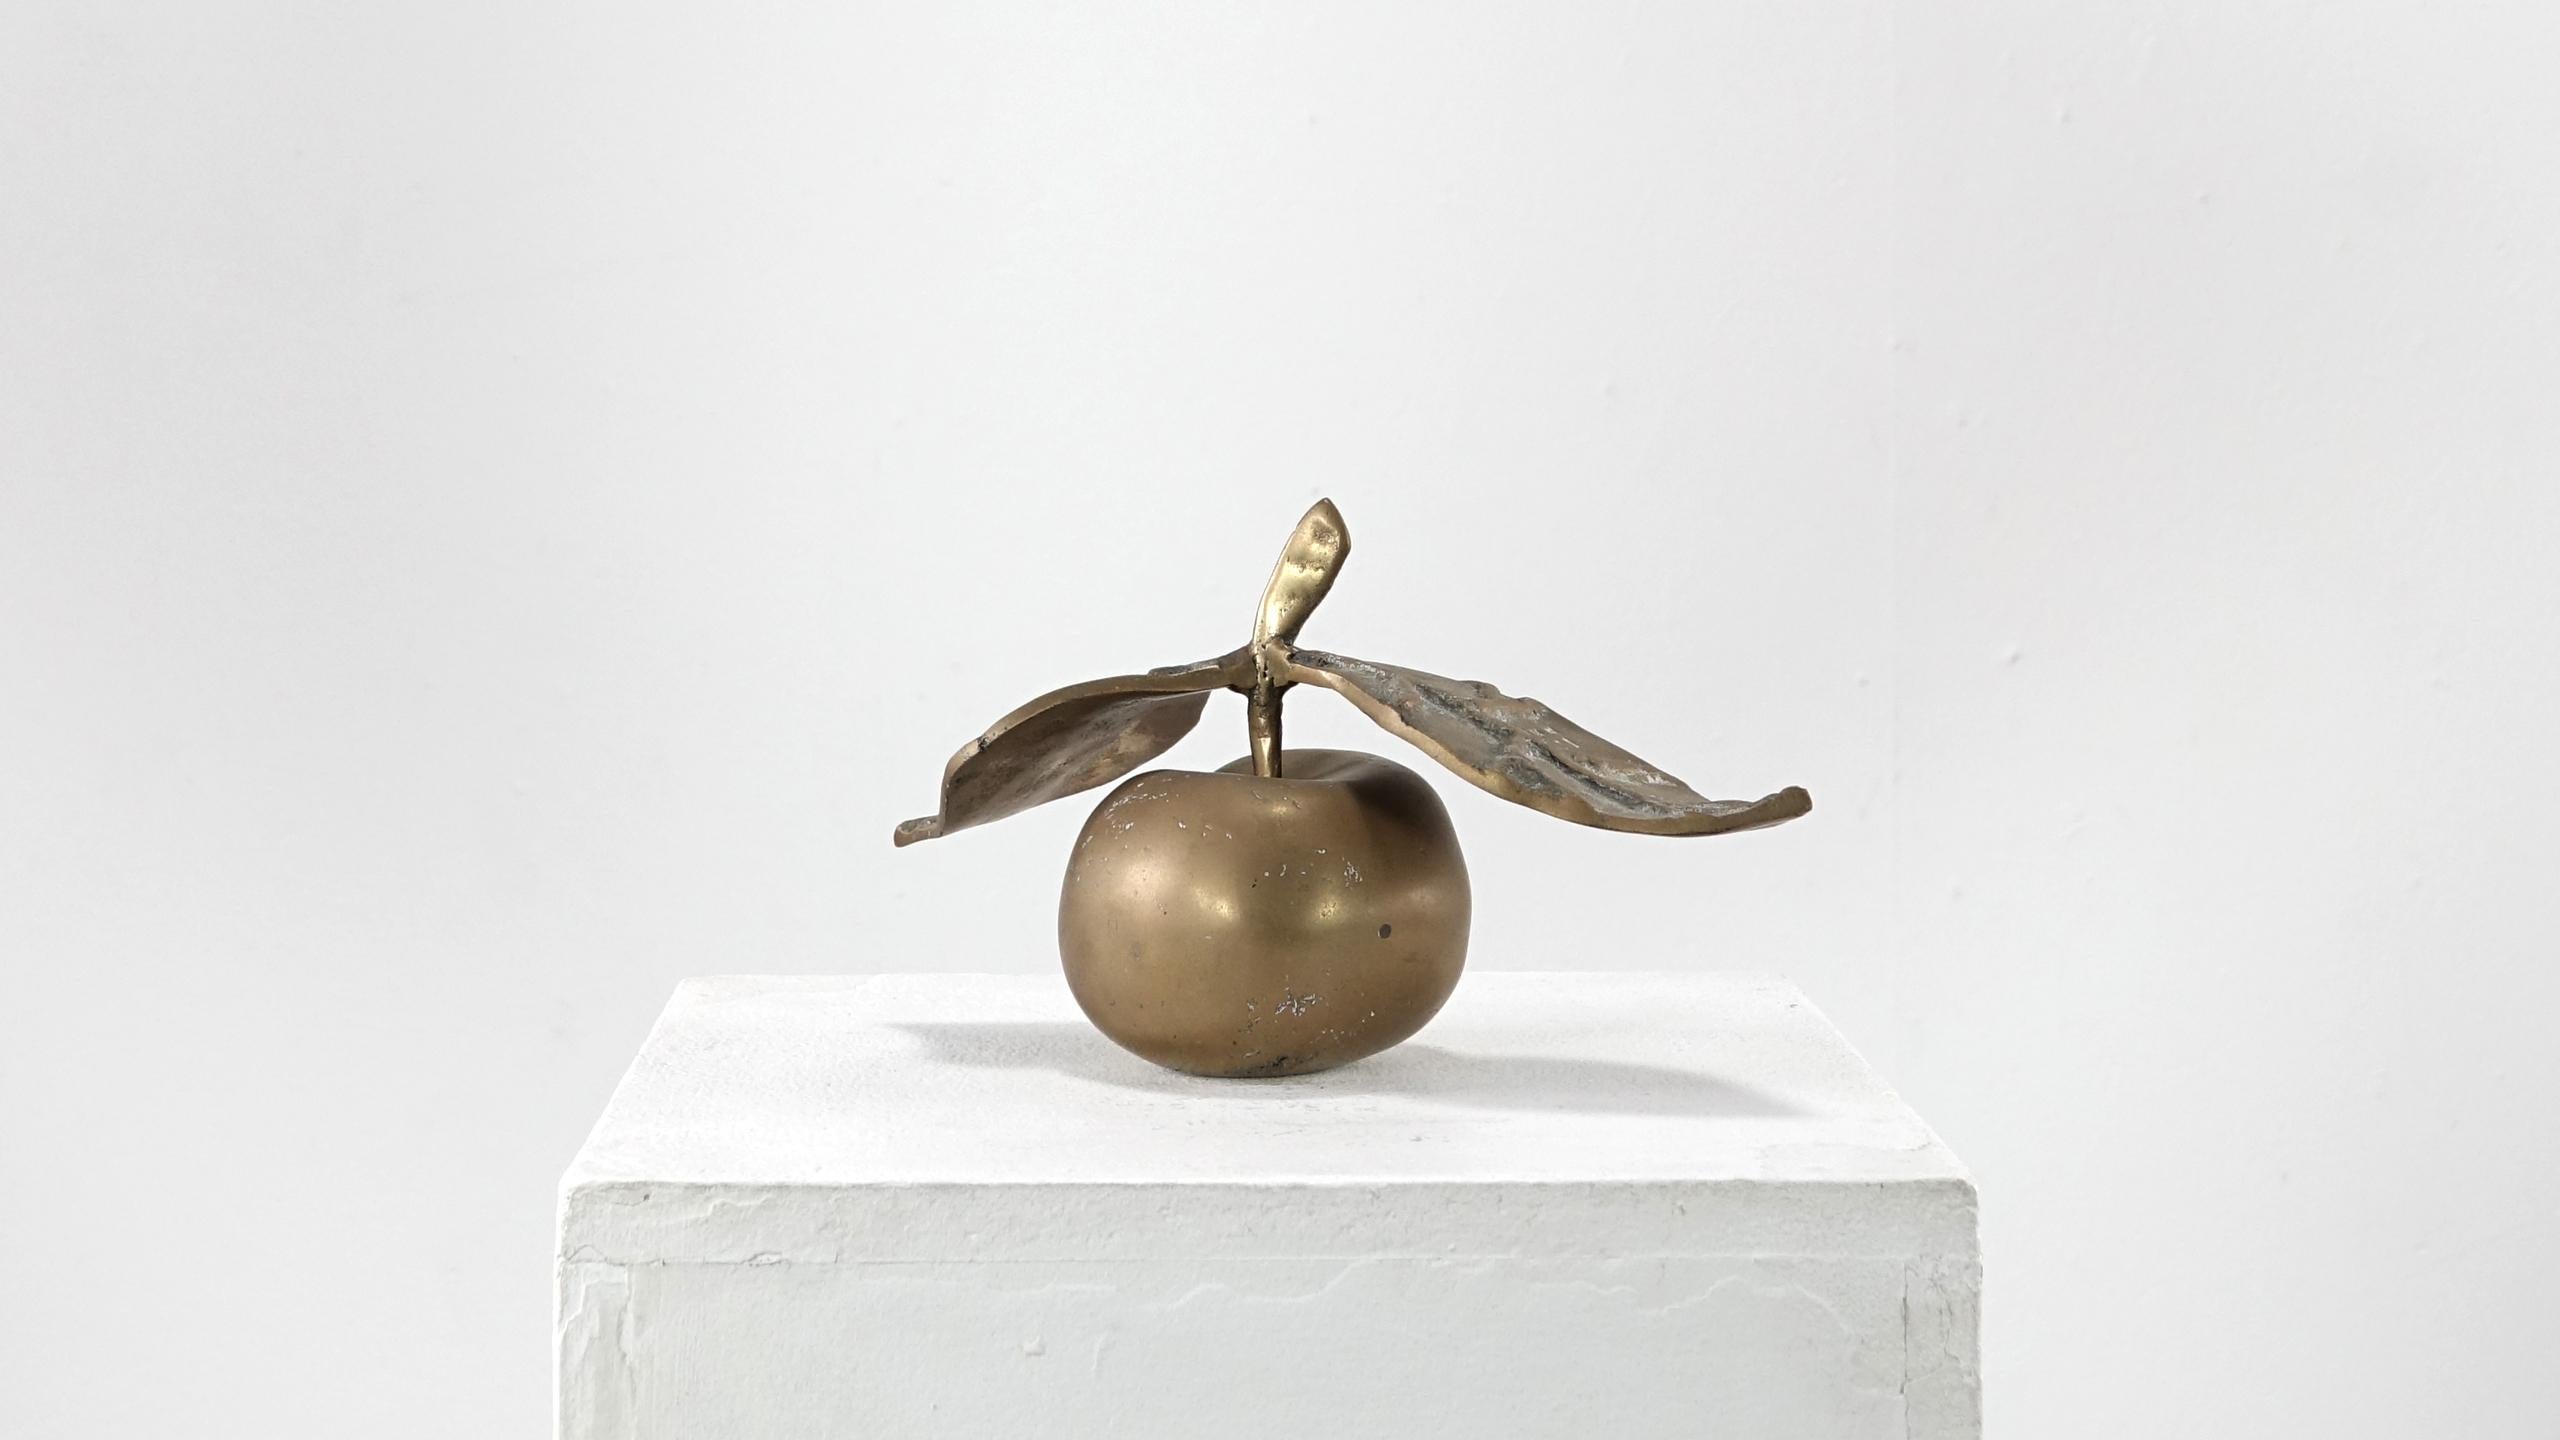 David Marshall Desenos Brass Apple Sculpture 7